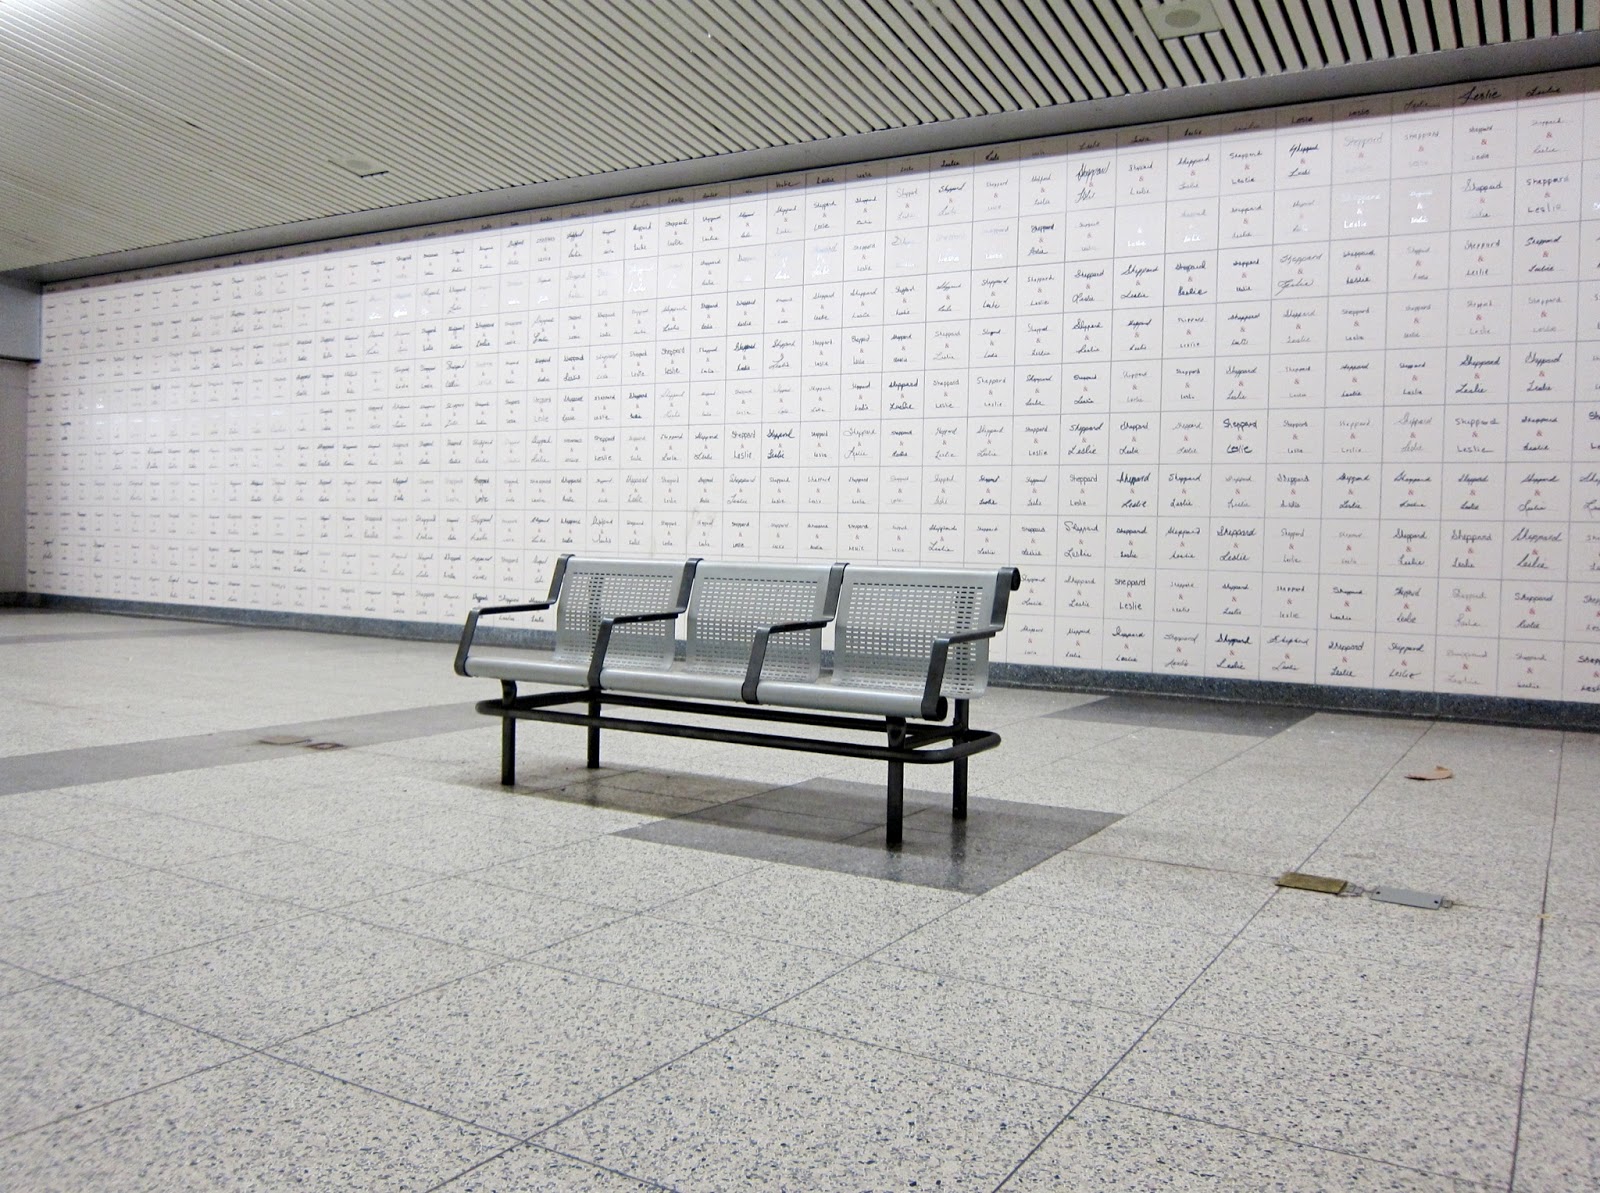 Leslie station bench seating